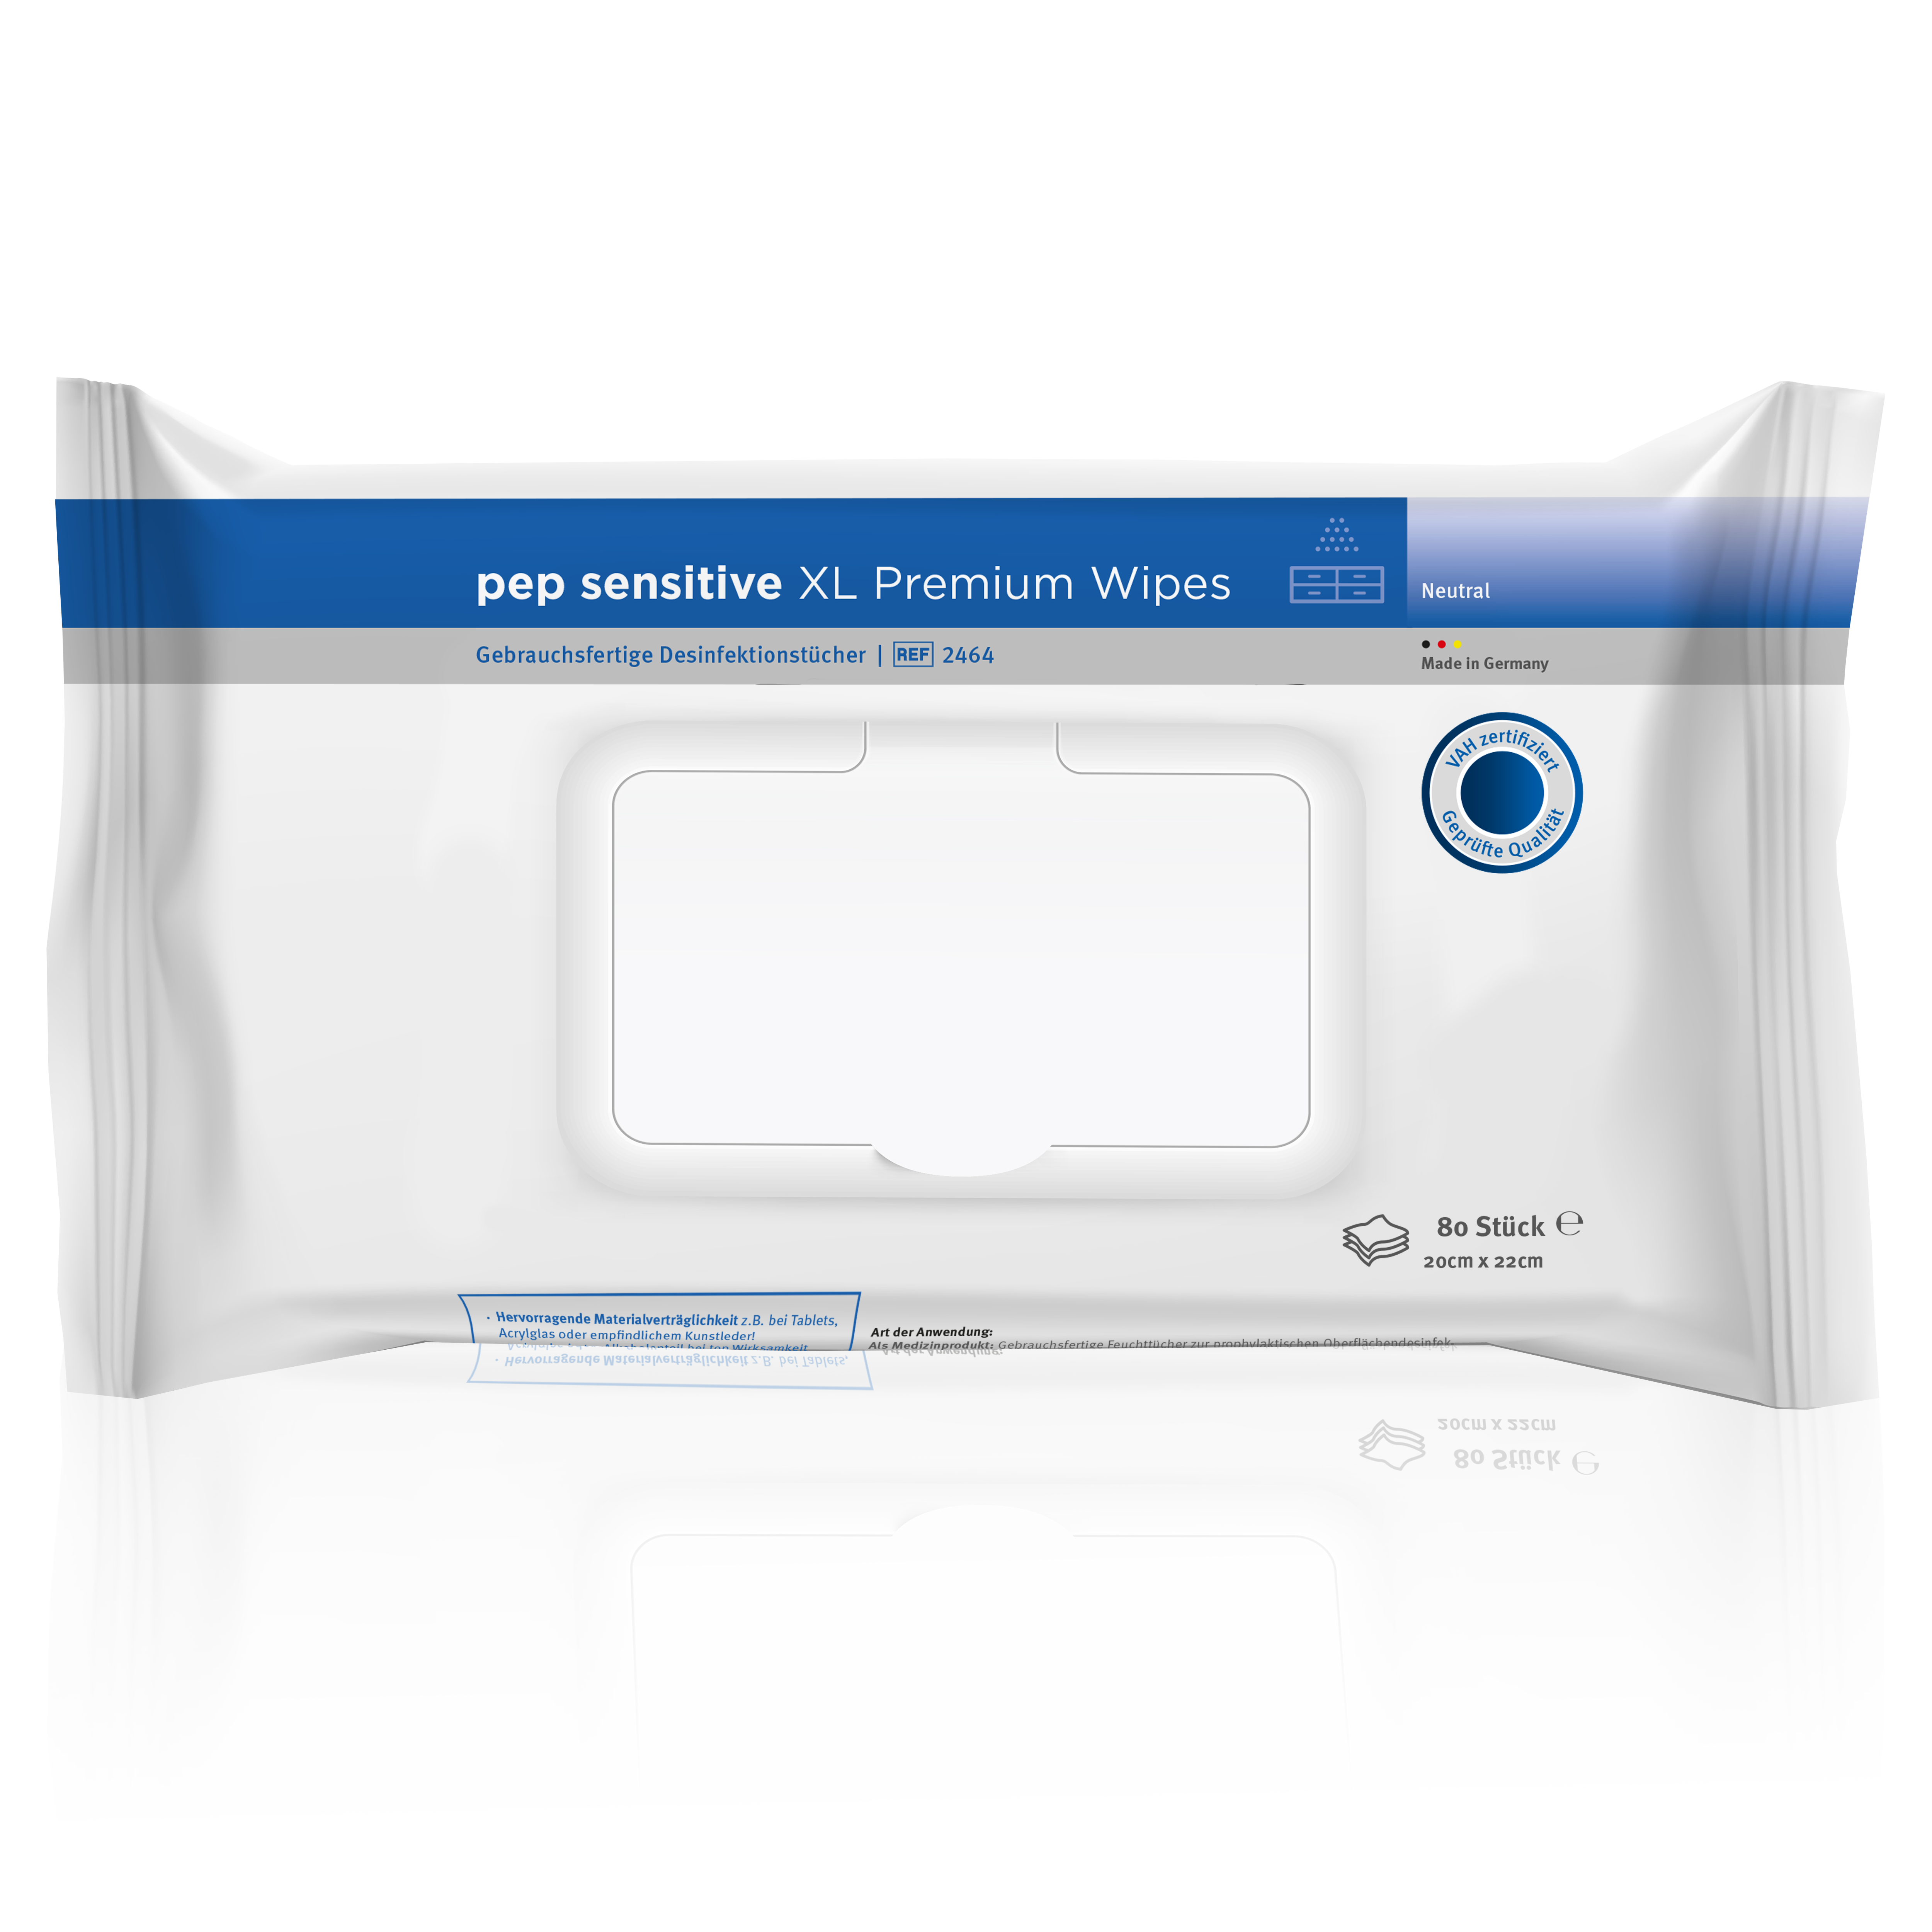 pep sensitive XL PremiumWipes, Gebrauchsfertige, 80 alkoholreduzierte Desinfektionstücher